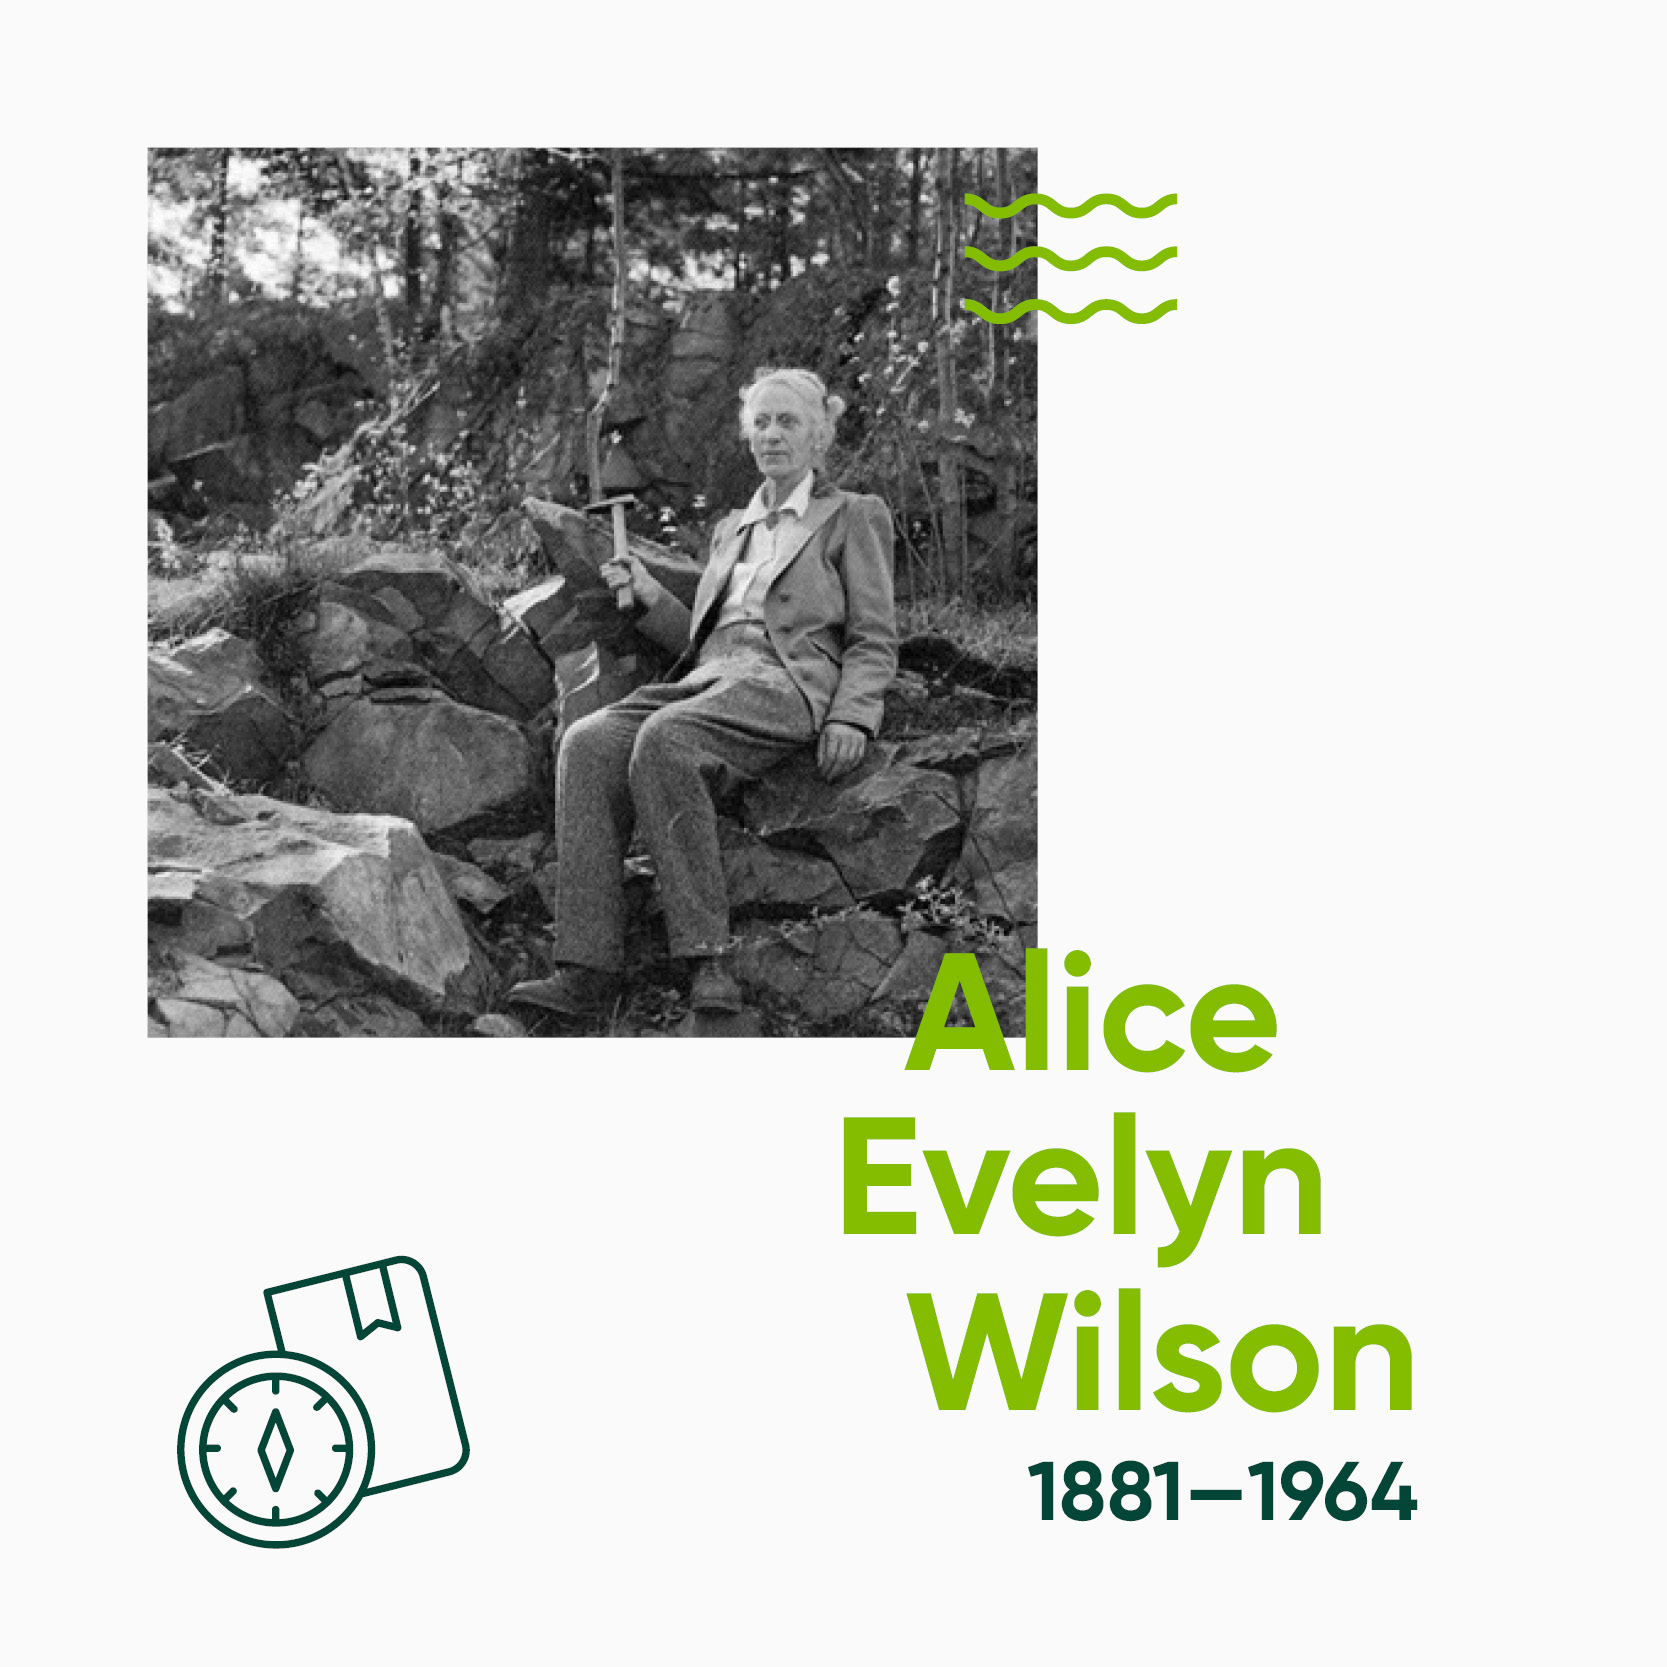 Alice Evelyn Wilson, 1881-1964.